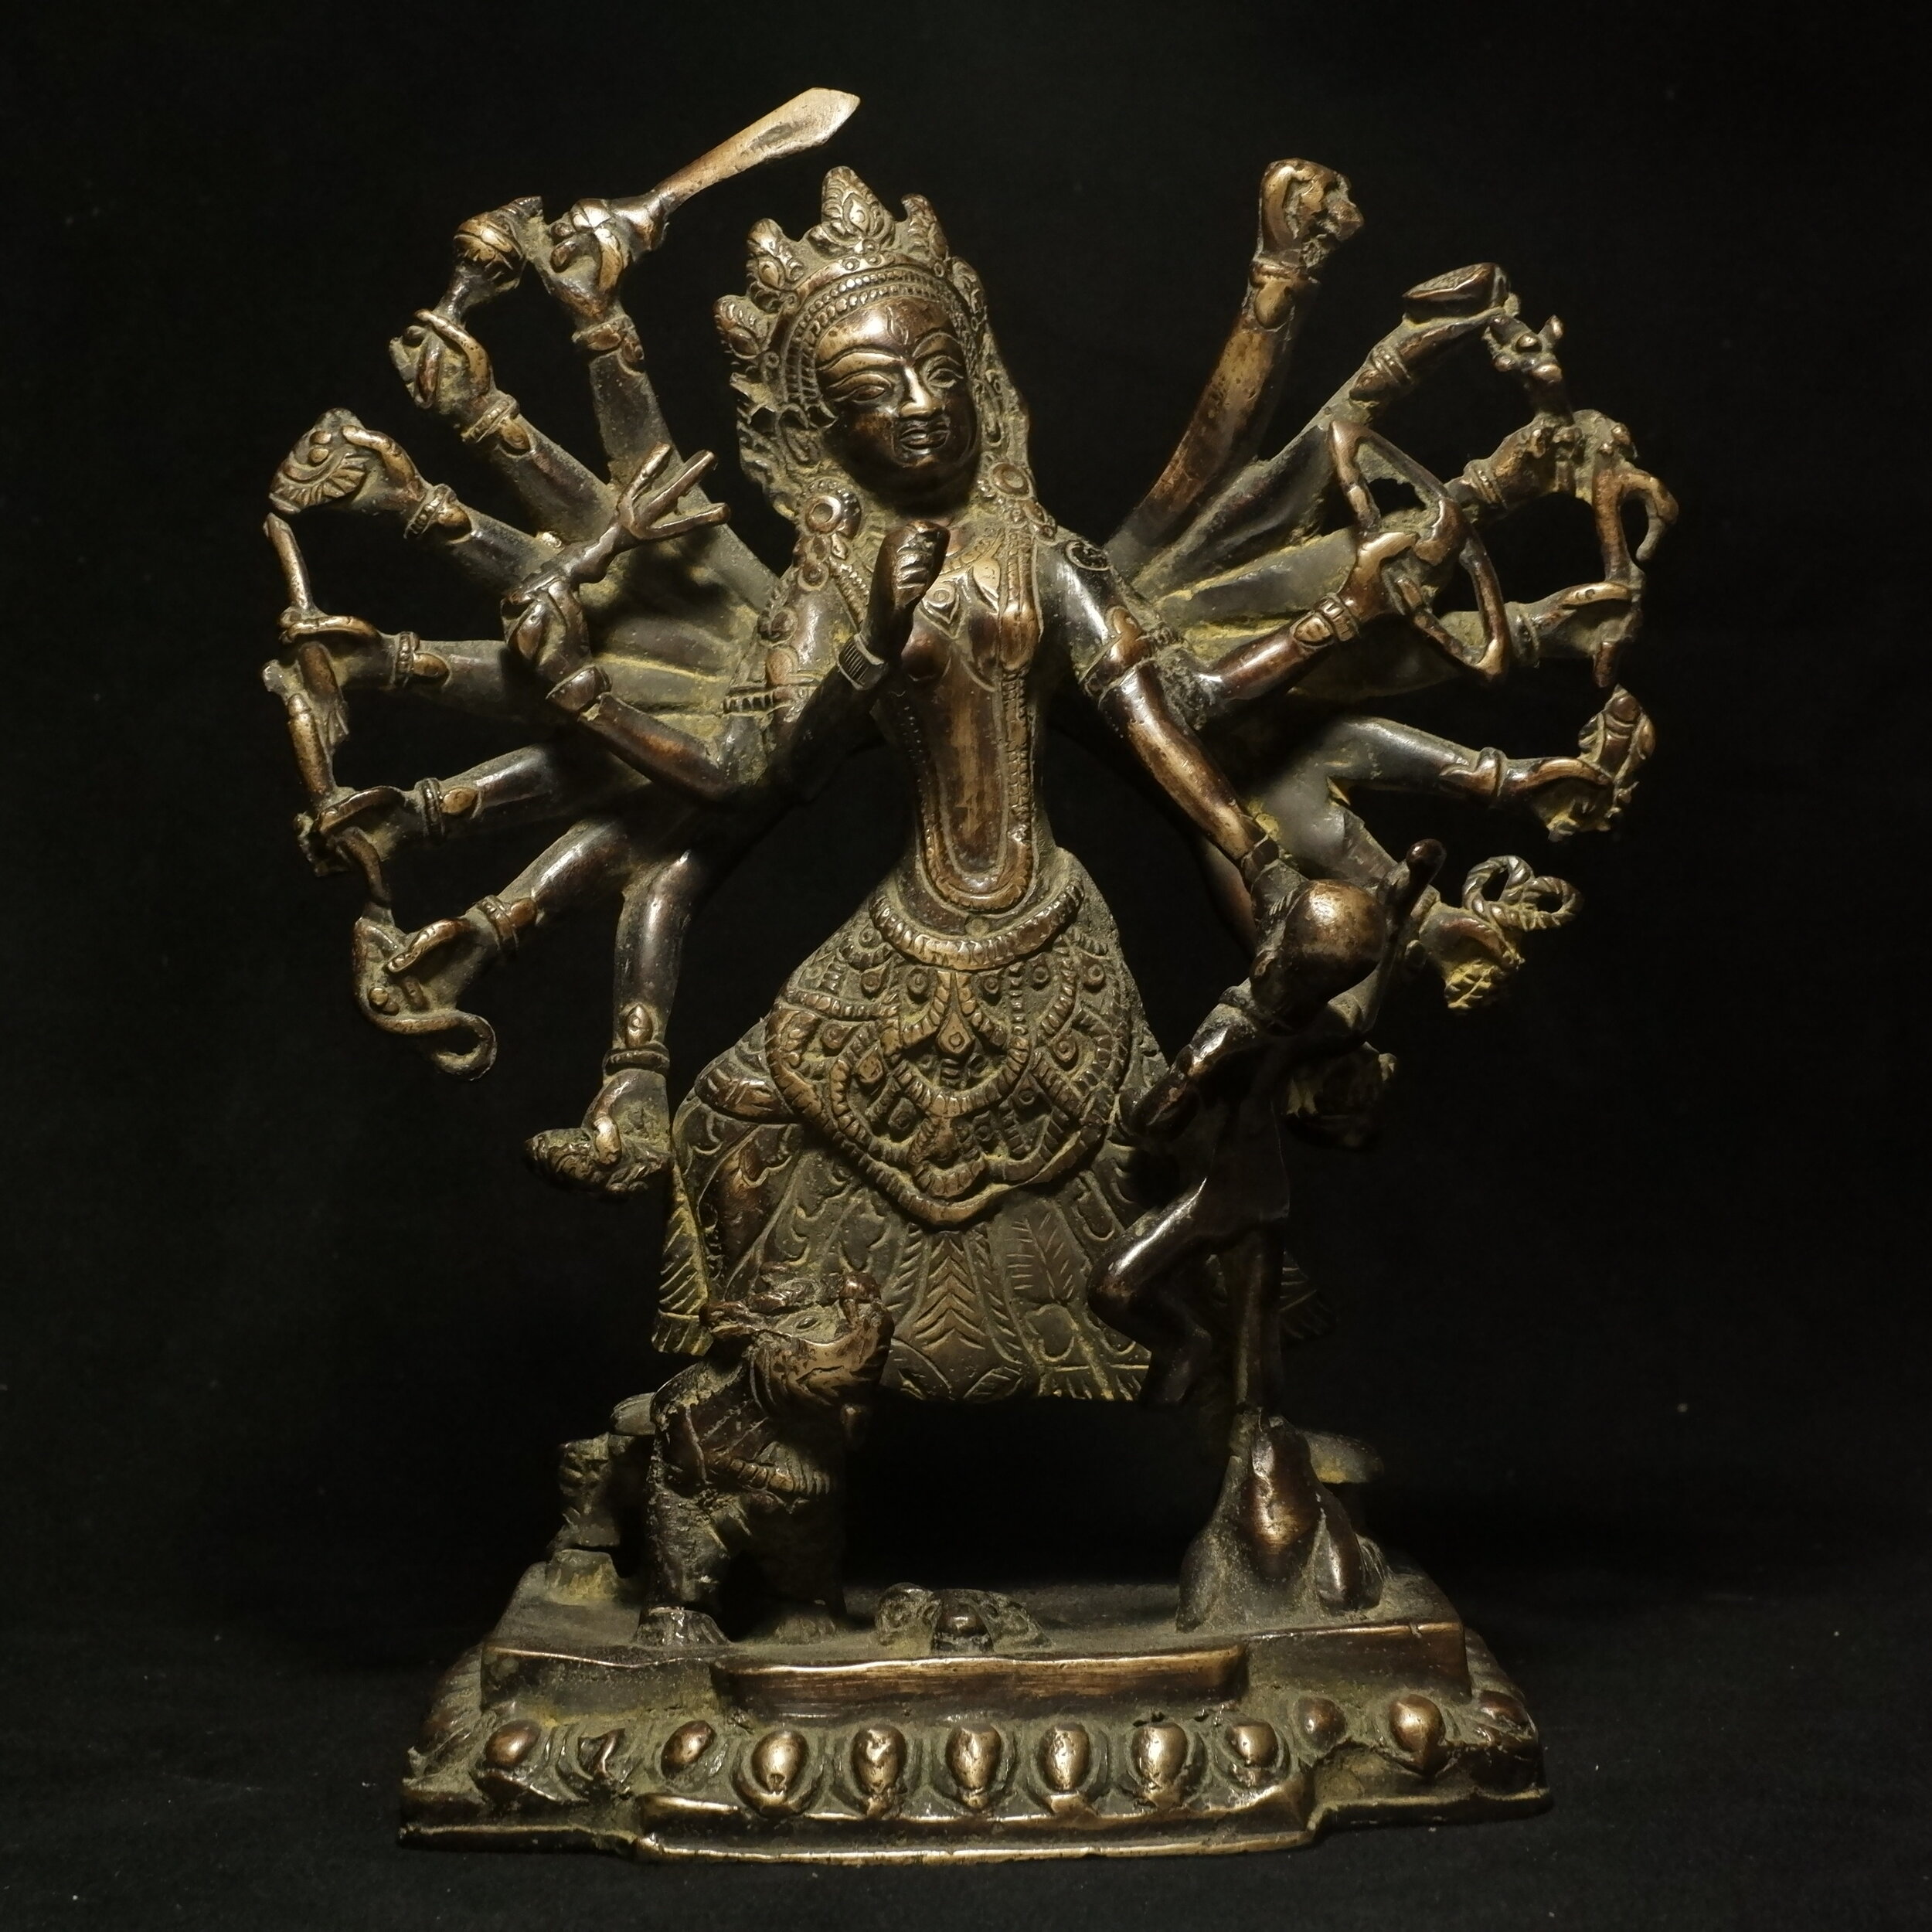 Indian Artifact Dealers: Artifacts for Sale — Magellan Art Gallery